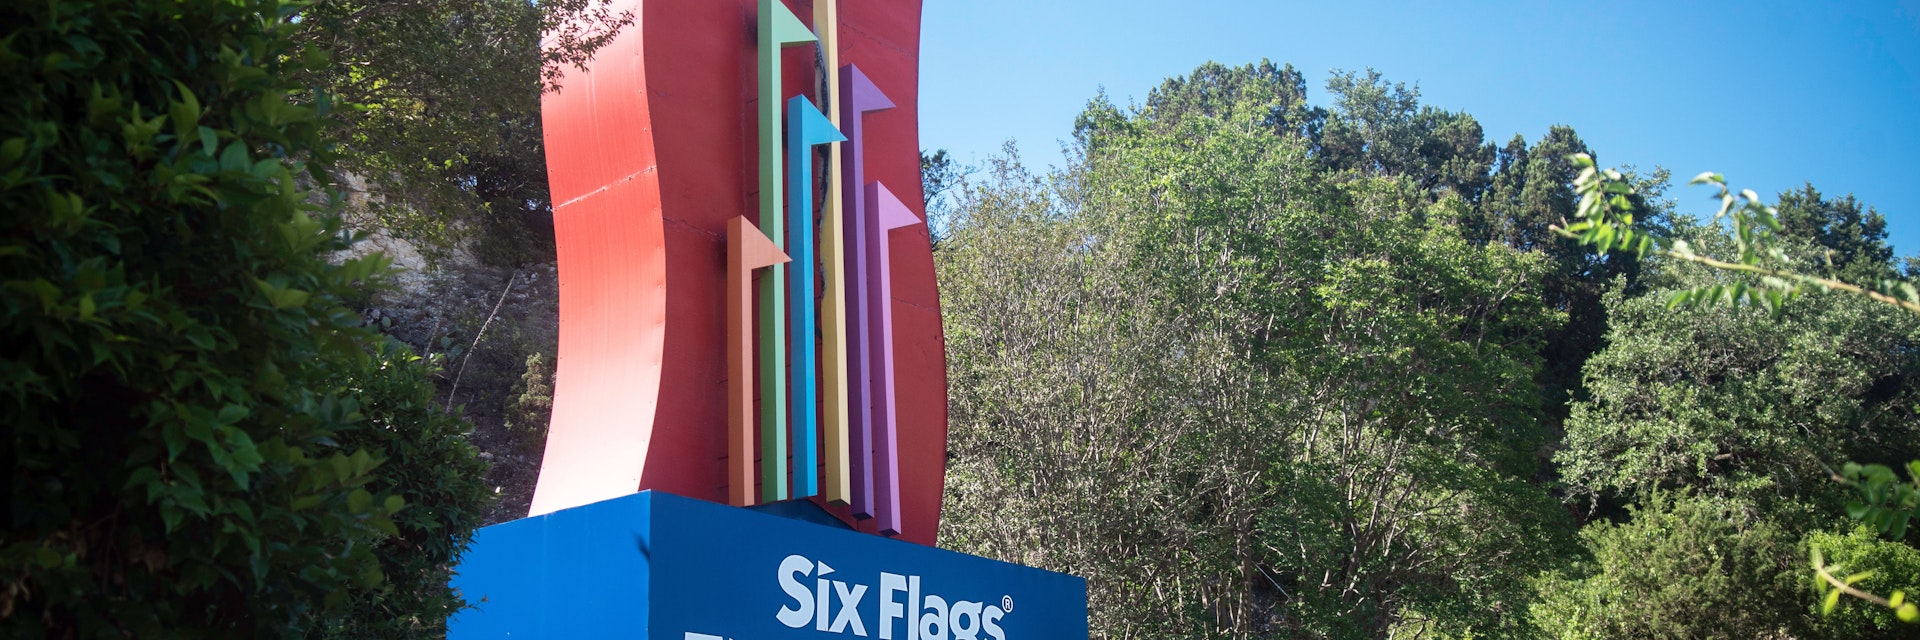 San Antonio, Texas - May 19 2020: Six Flags FIesta Texas; Shutterstock ID 1735910405; your: Bridget Brown; gl: 65050; netsuite: Online Editorial; full: POI Image Update